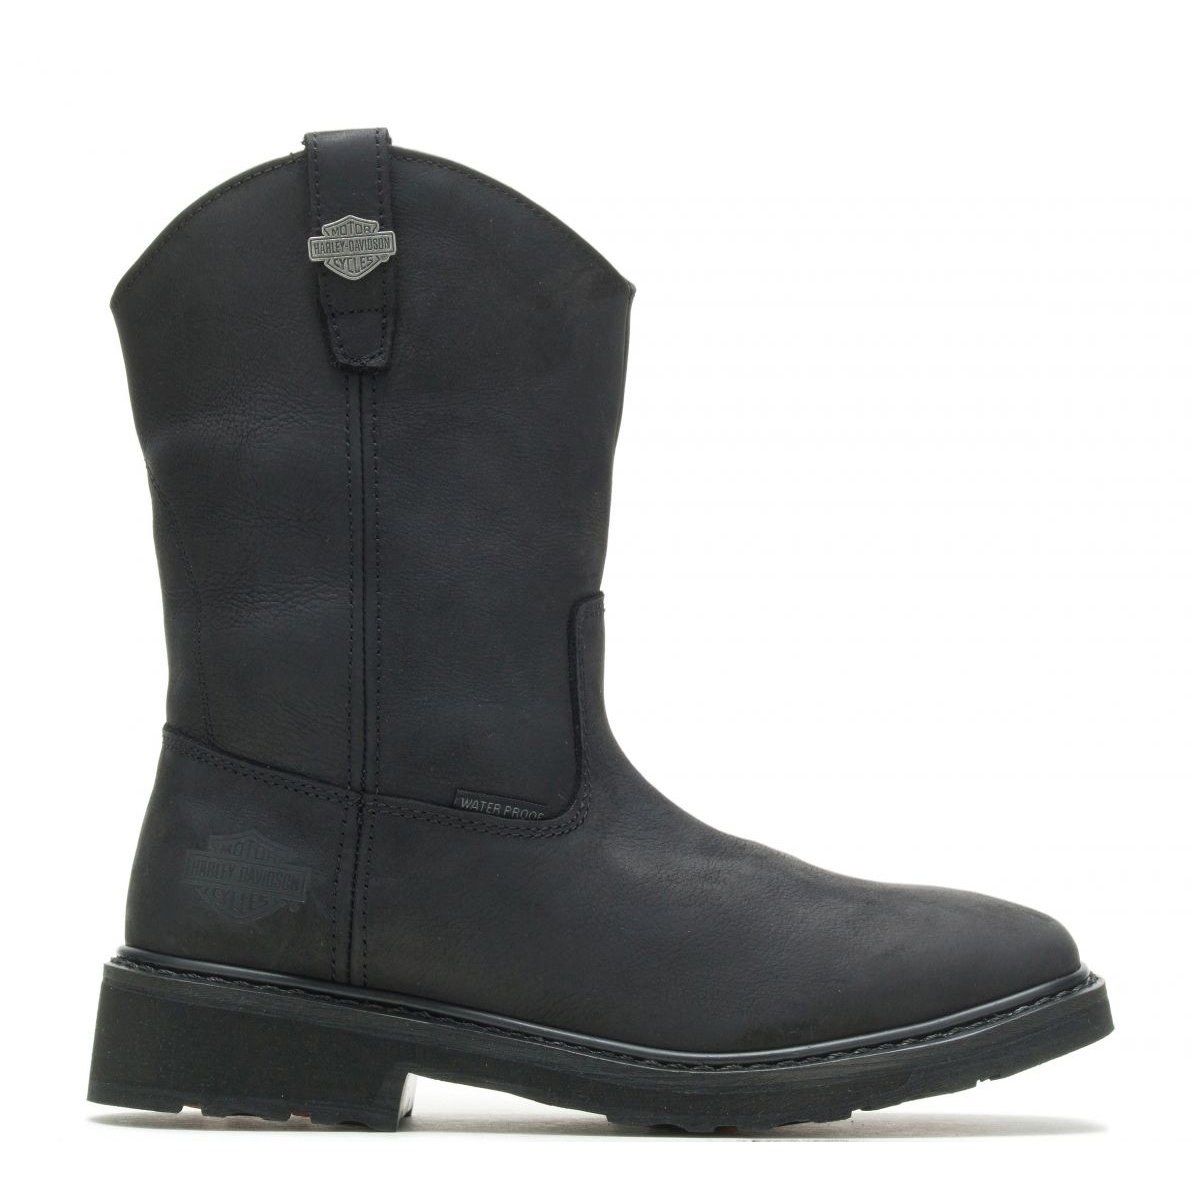 HARLEY-DAVIDSON WORK Men's Altman Western Classic Soft Toe Work Boot Black - D93561 Black/black - Black/black, 10.5